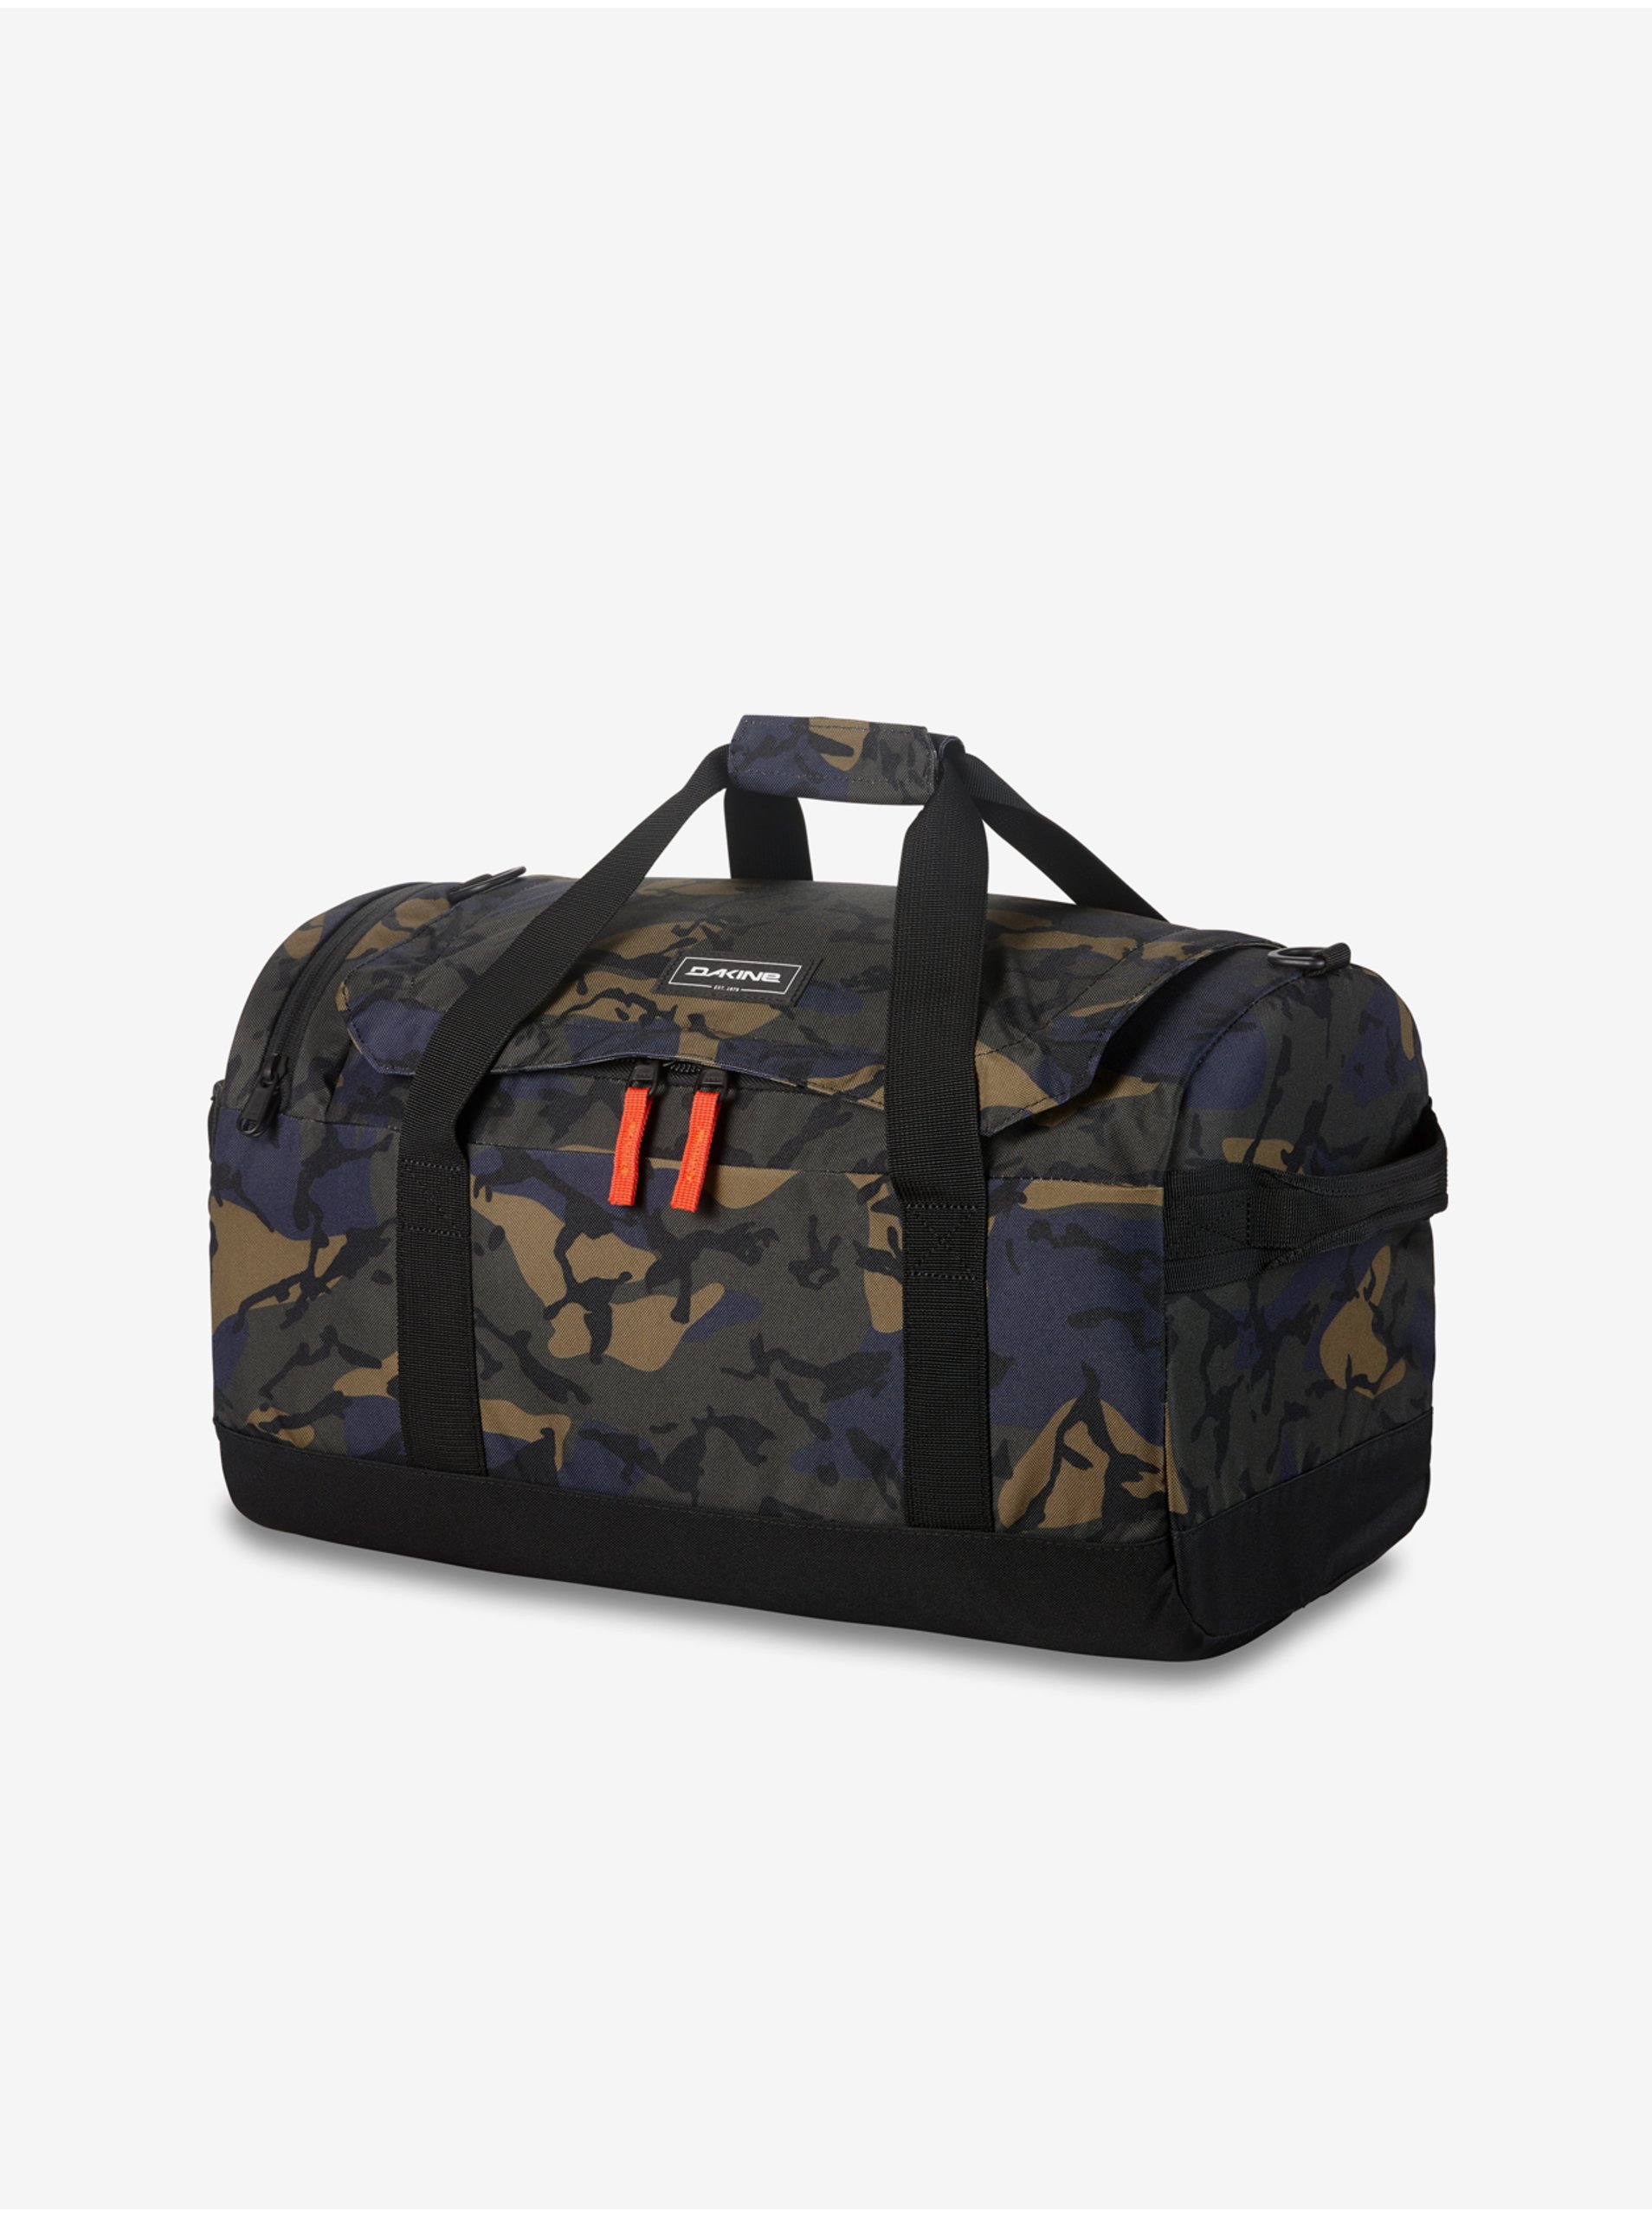 Doplnky Cestovné  tašky a kufre - Brown Men's Patterned Travel Bag Dakine Duffle - Men's